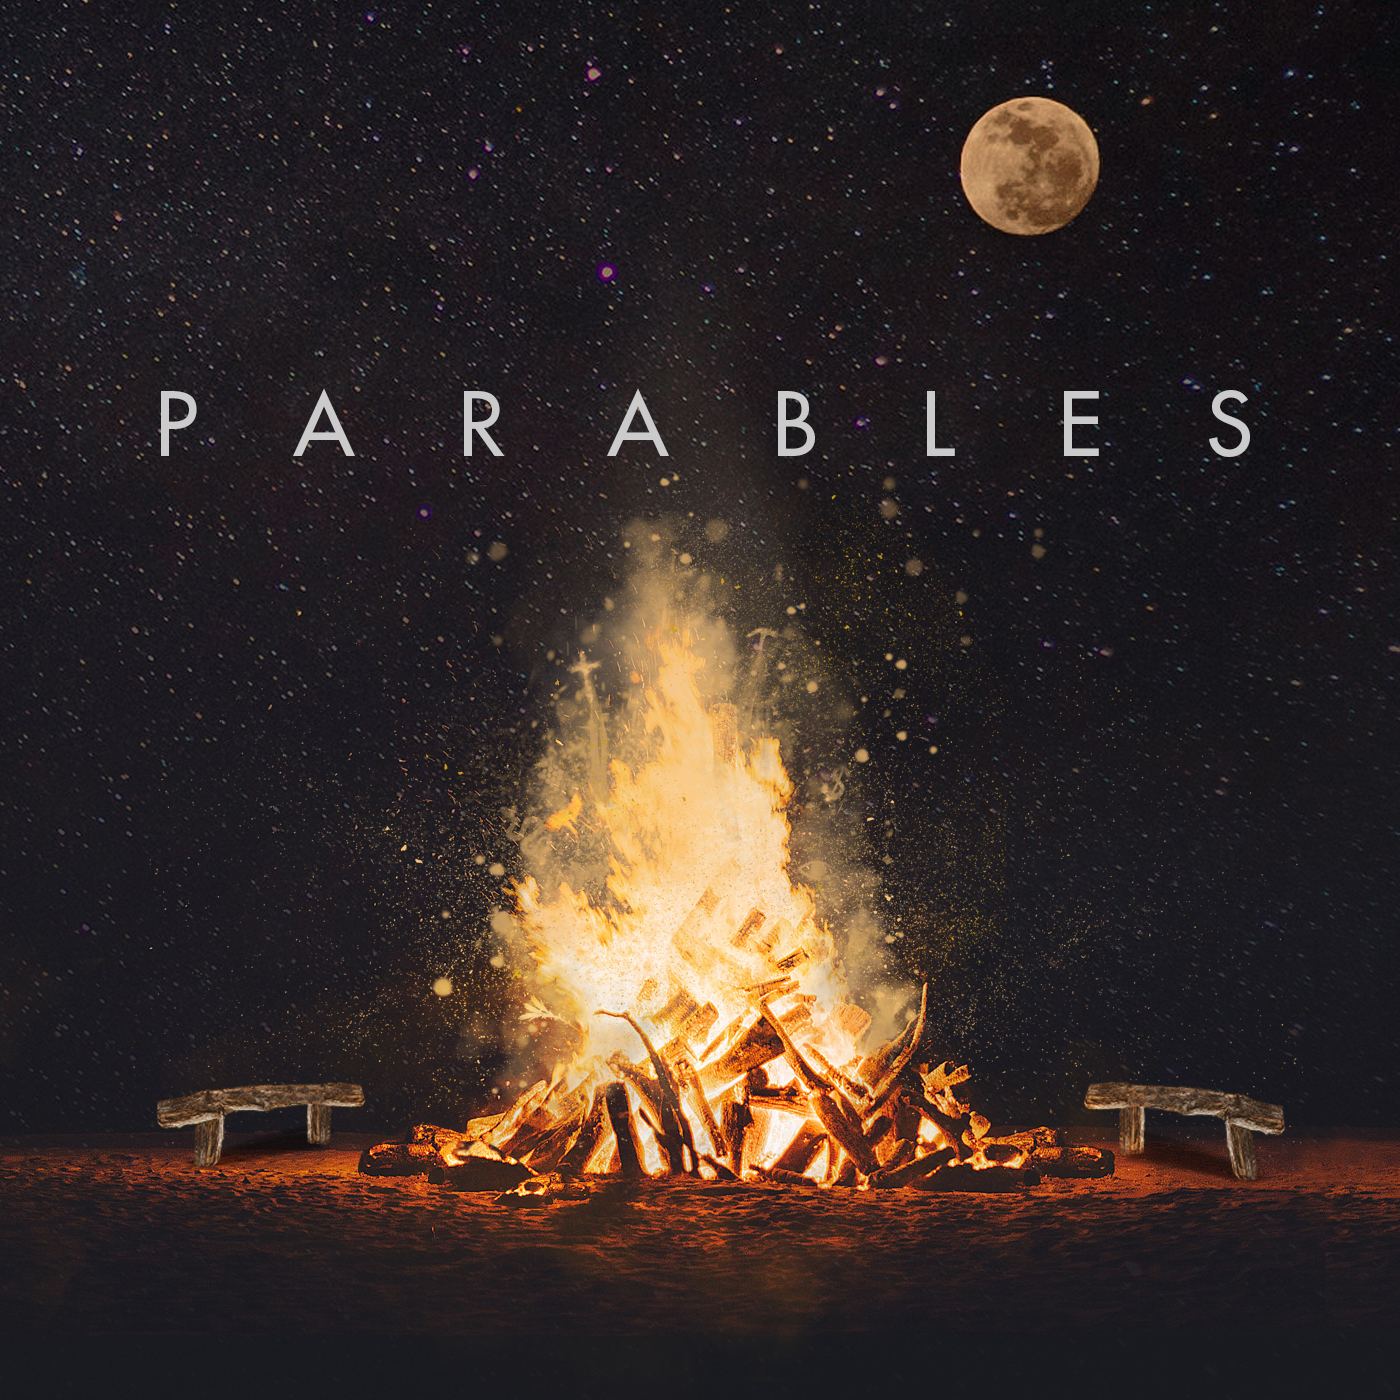 Parables - Special Guest John Brady - 11-10-2019